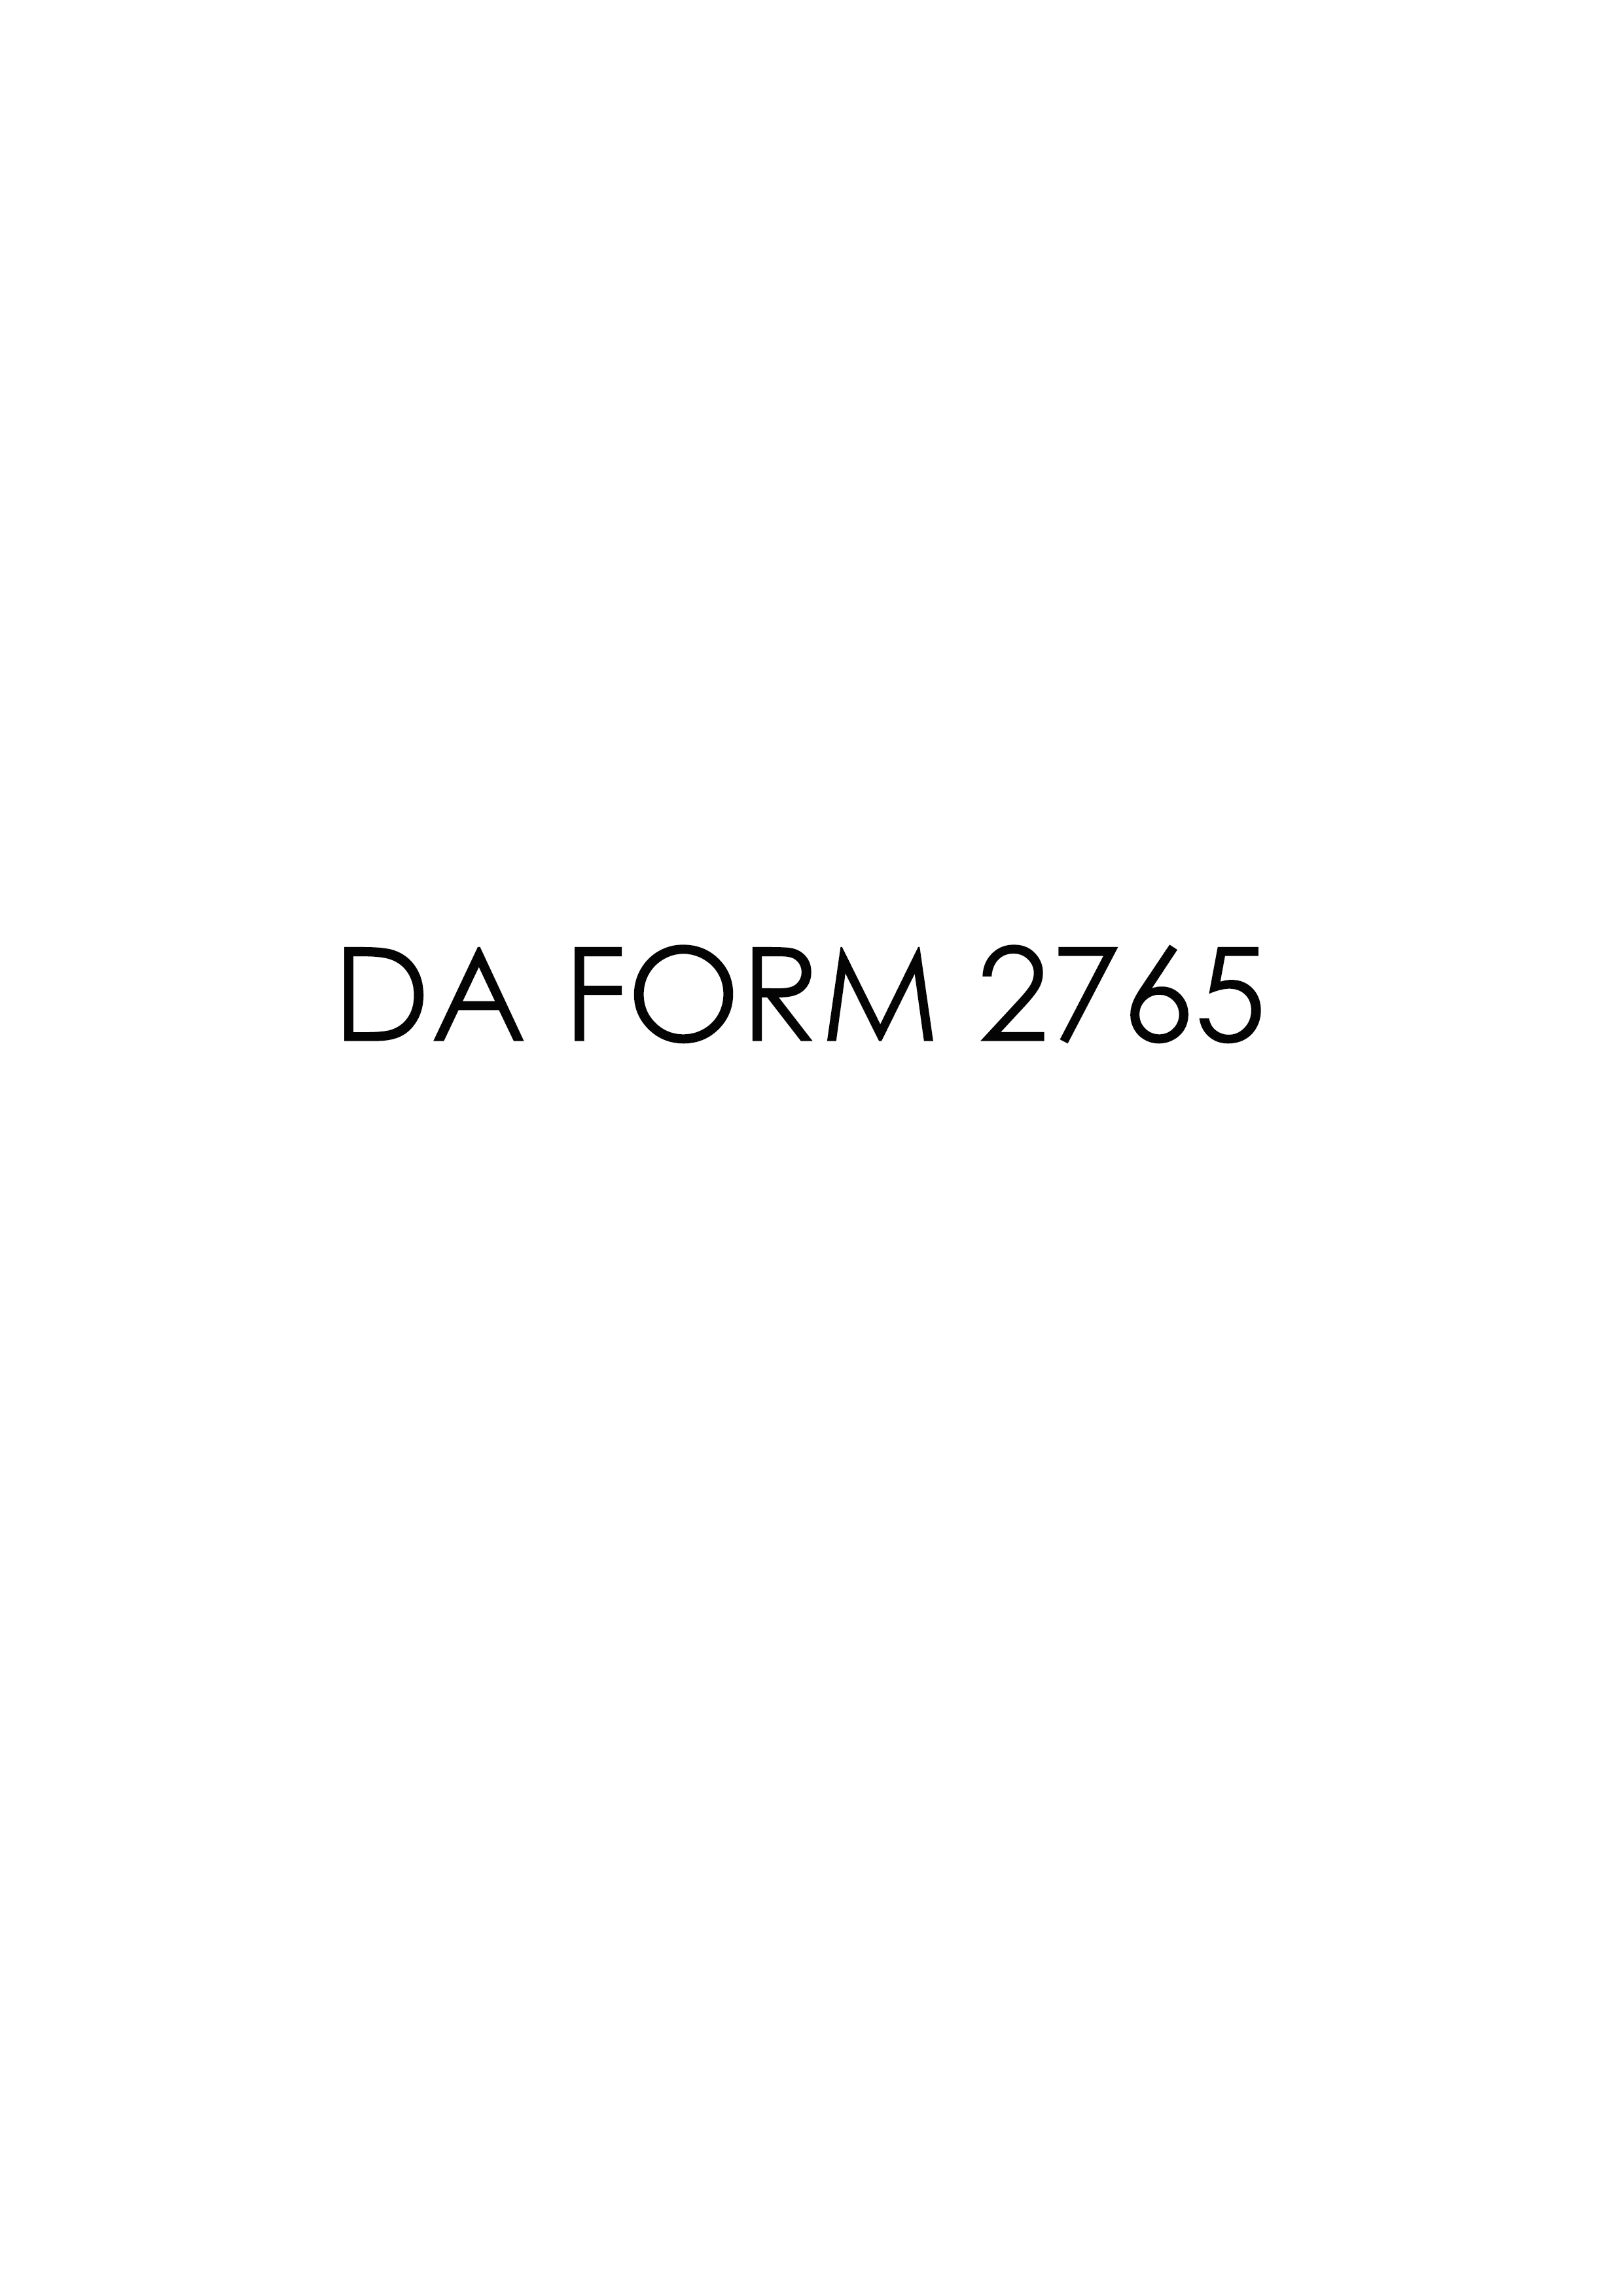 da Form 2765 fillable